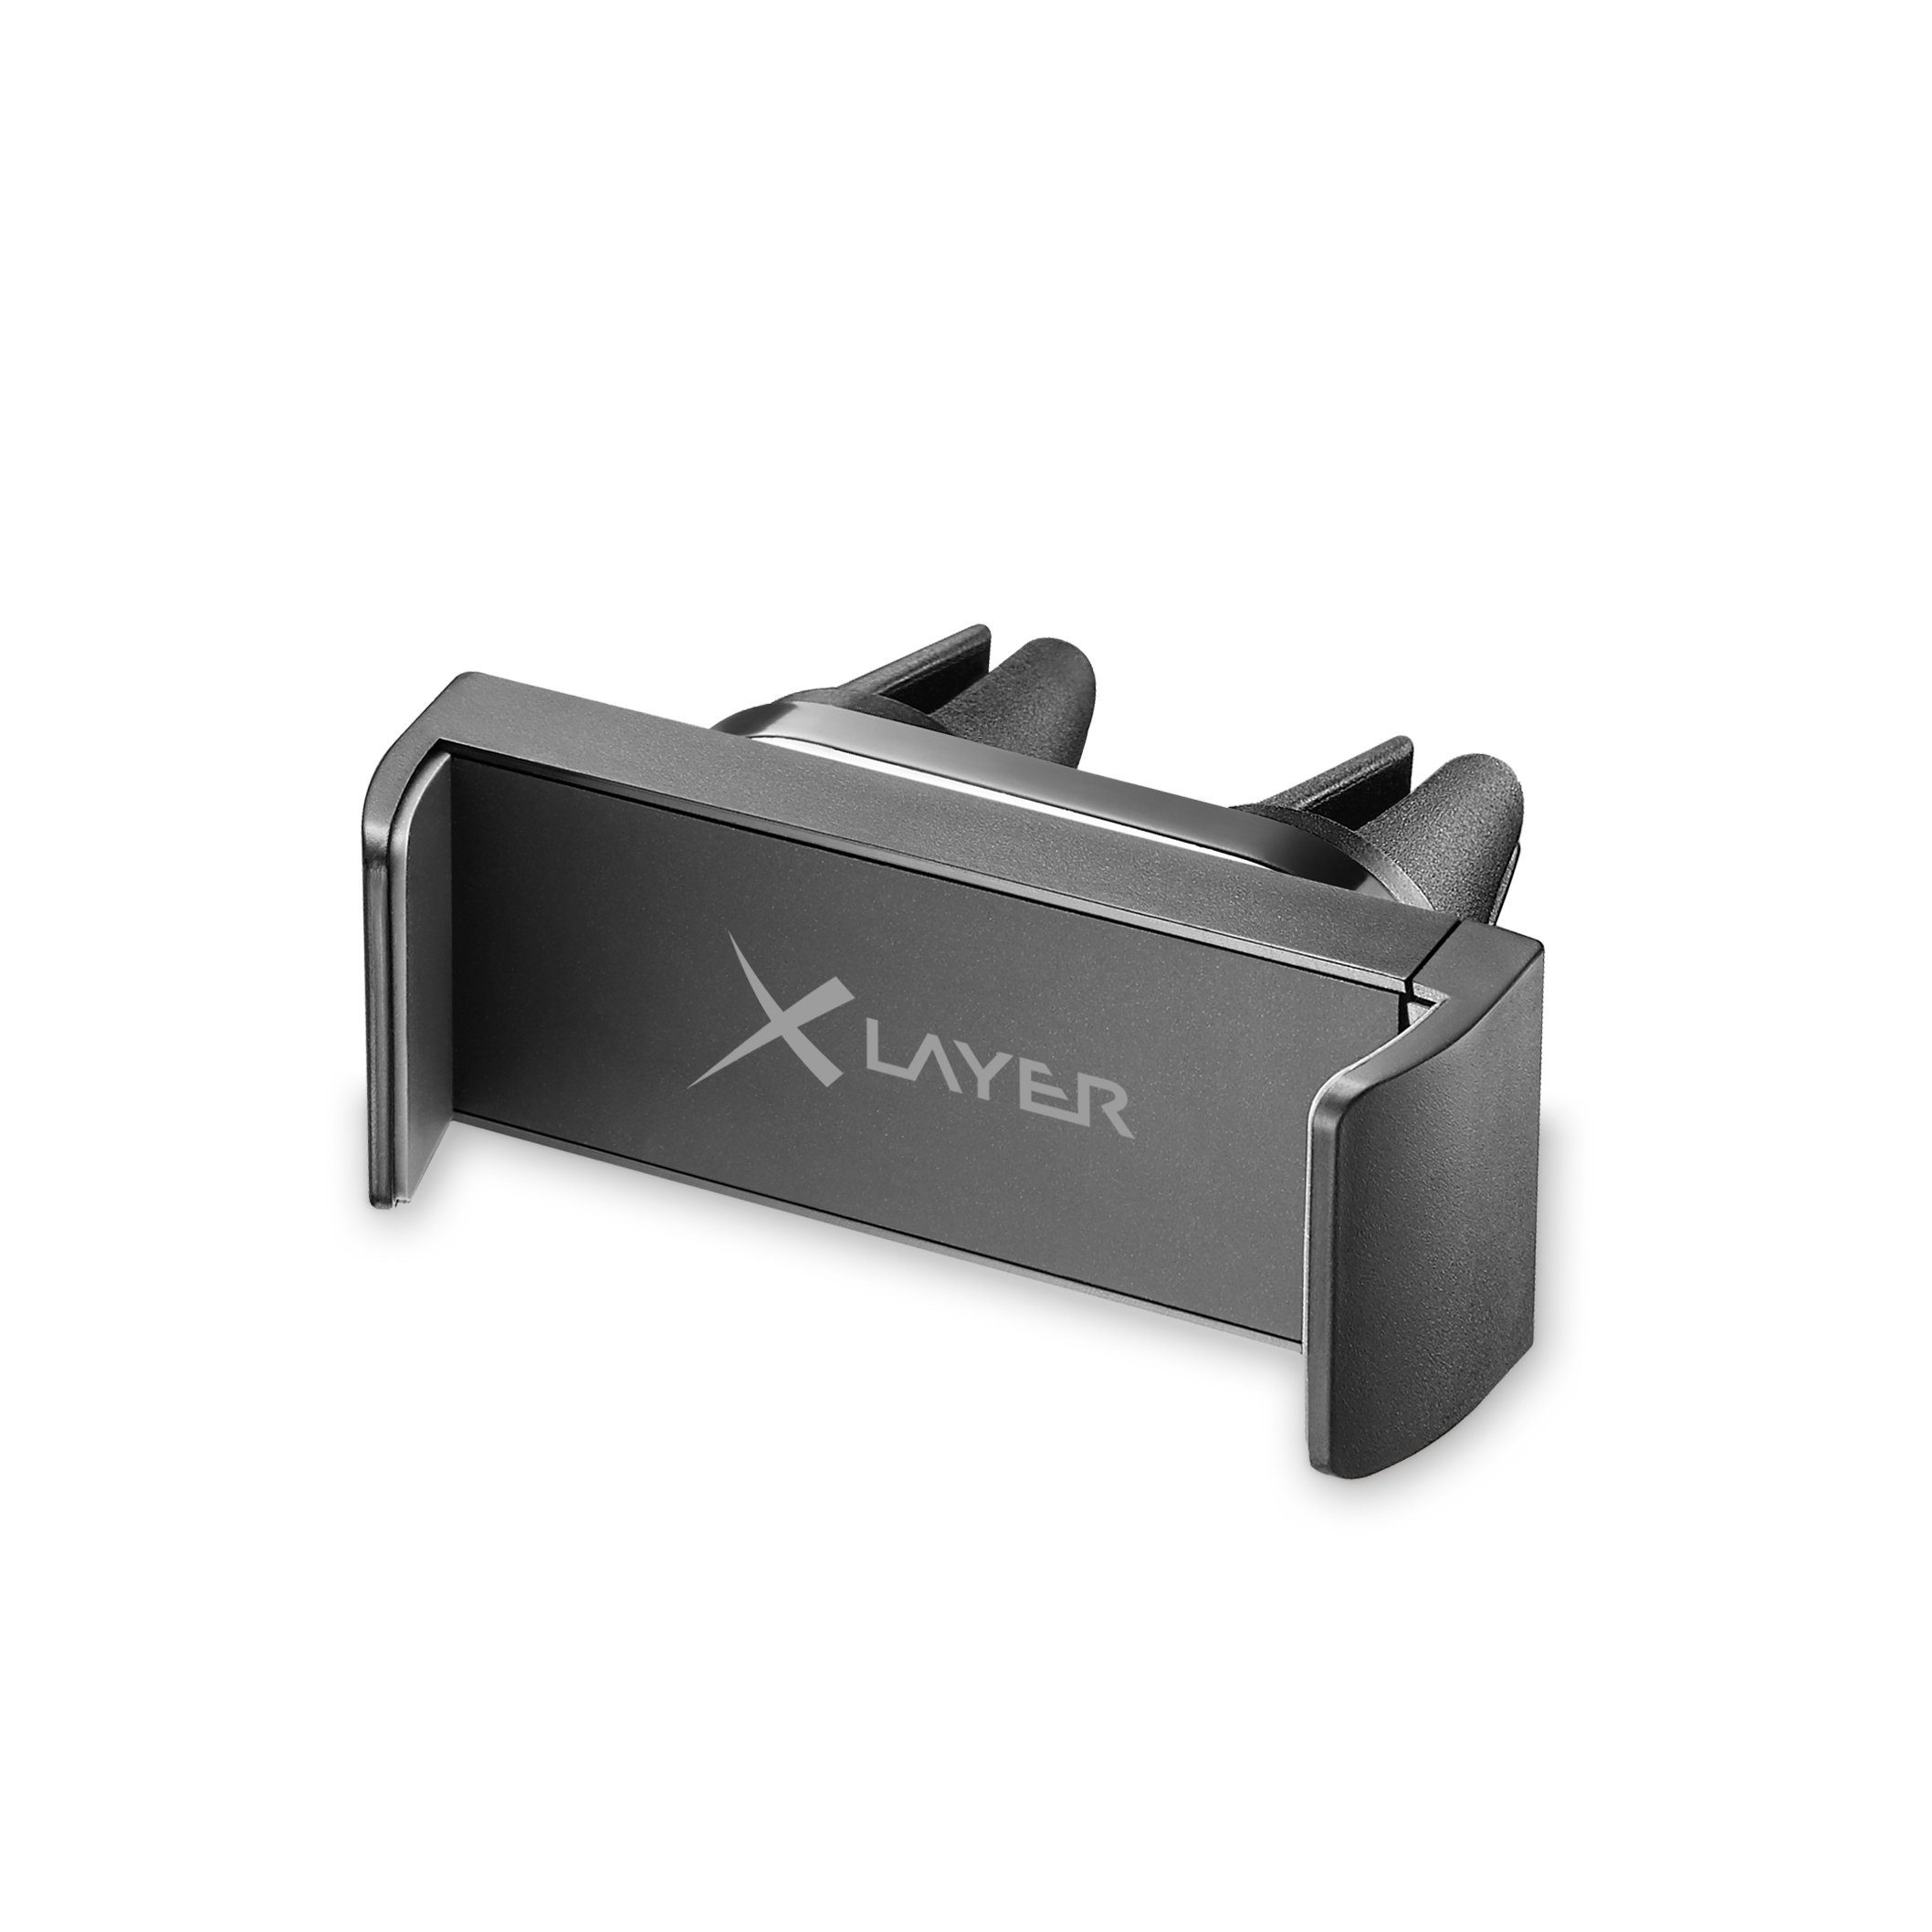 Xlayer MAGFIX Kfz-Halterung XLayer magfix Magnethalterung für den